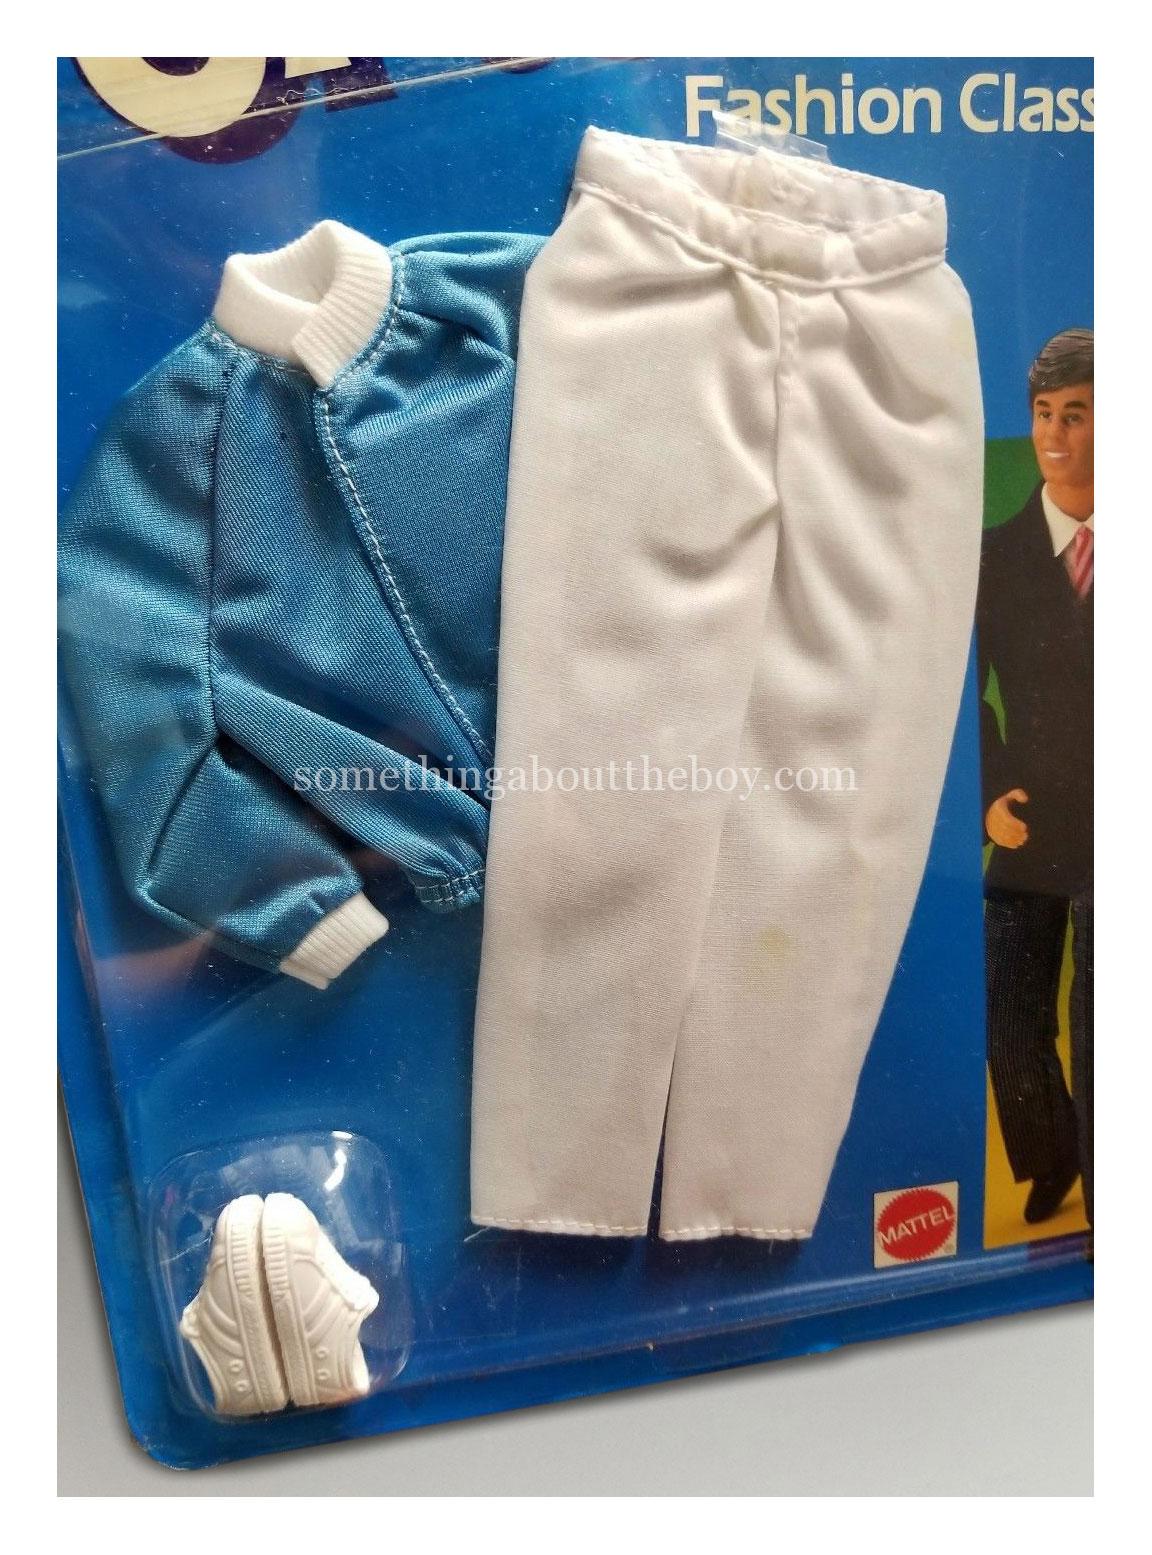 1986-87 Kmart Fashion Classics #2895 in original packaging